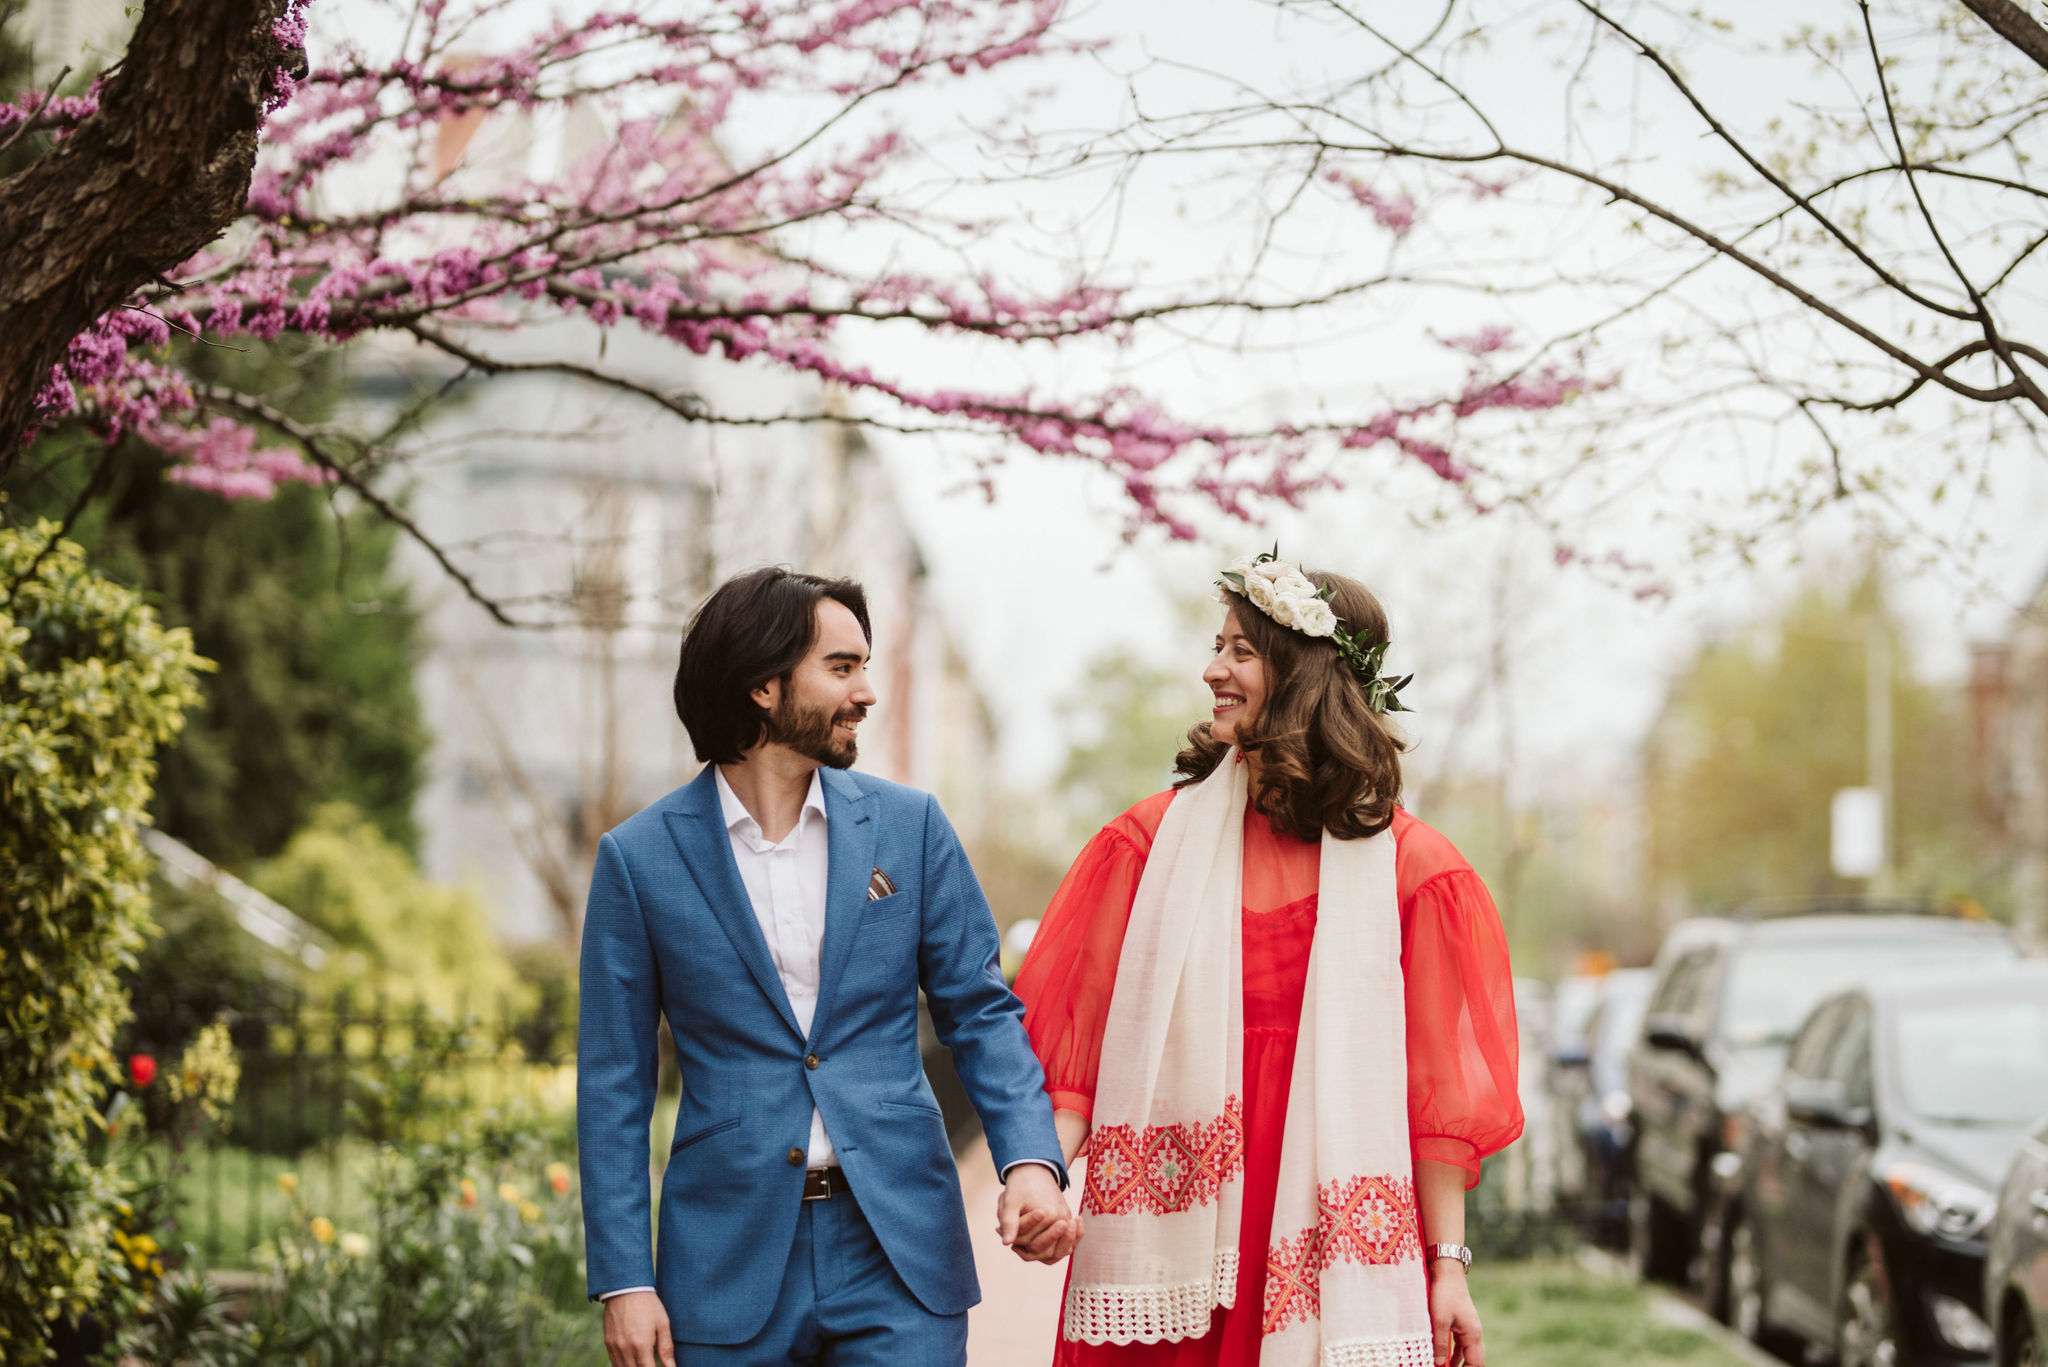  Washington DC, Baltimore Wedding Photographer, Intimate Wedding, Traditional, Classic, Palestinian, Couple Walking Hand in Hand on Sidewalk, Spring Flowers, Red Dress 